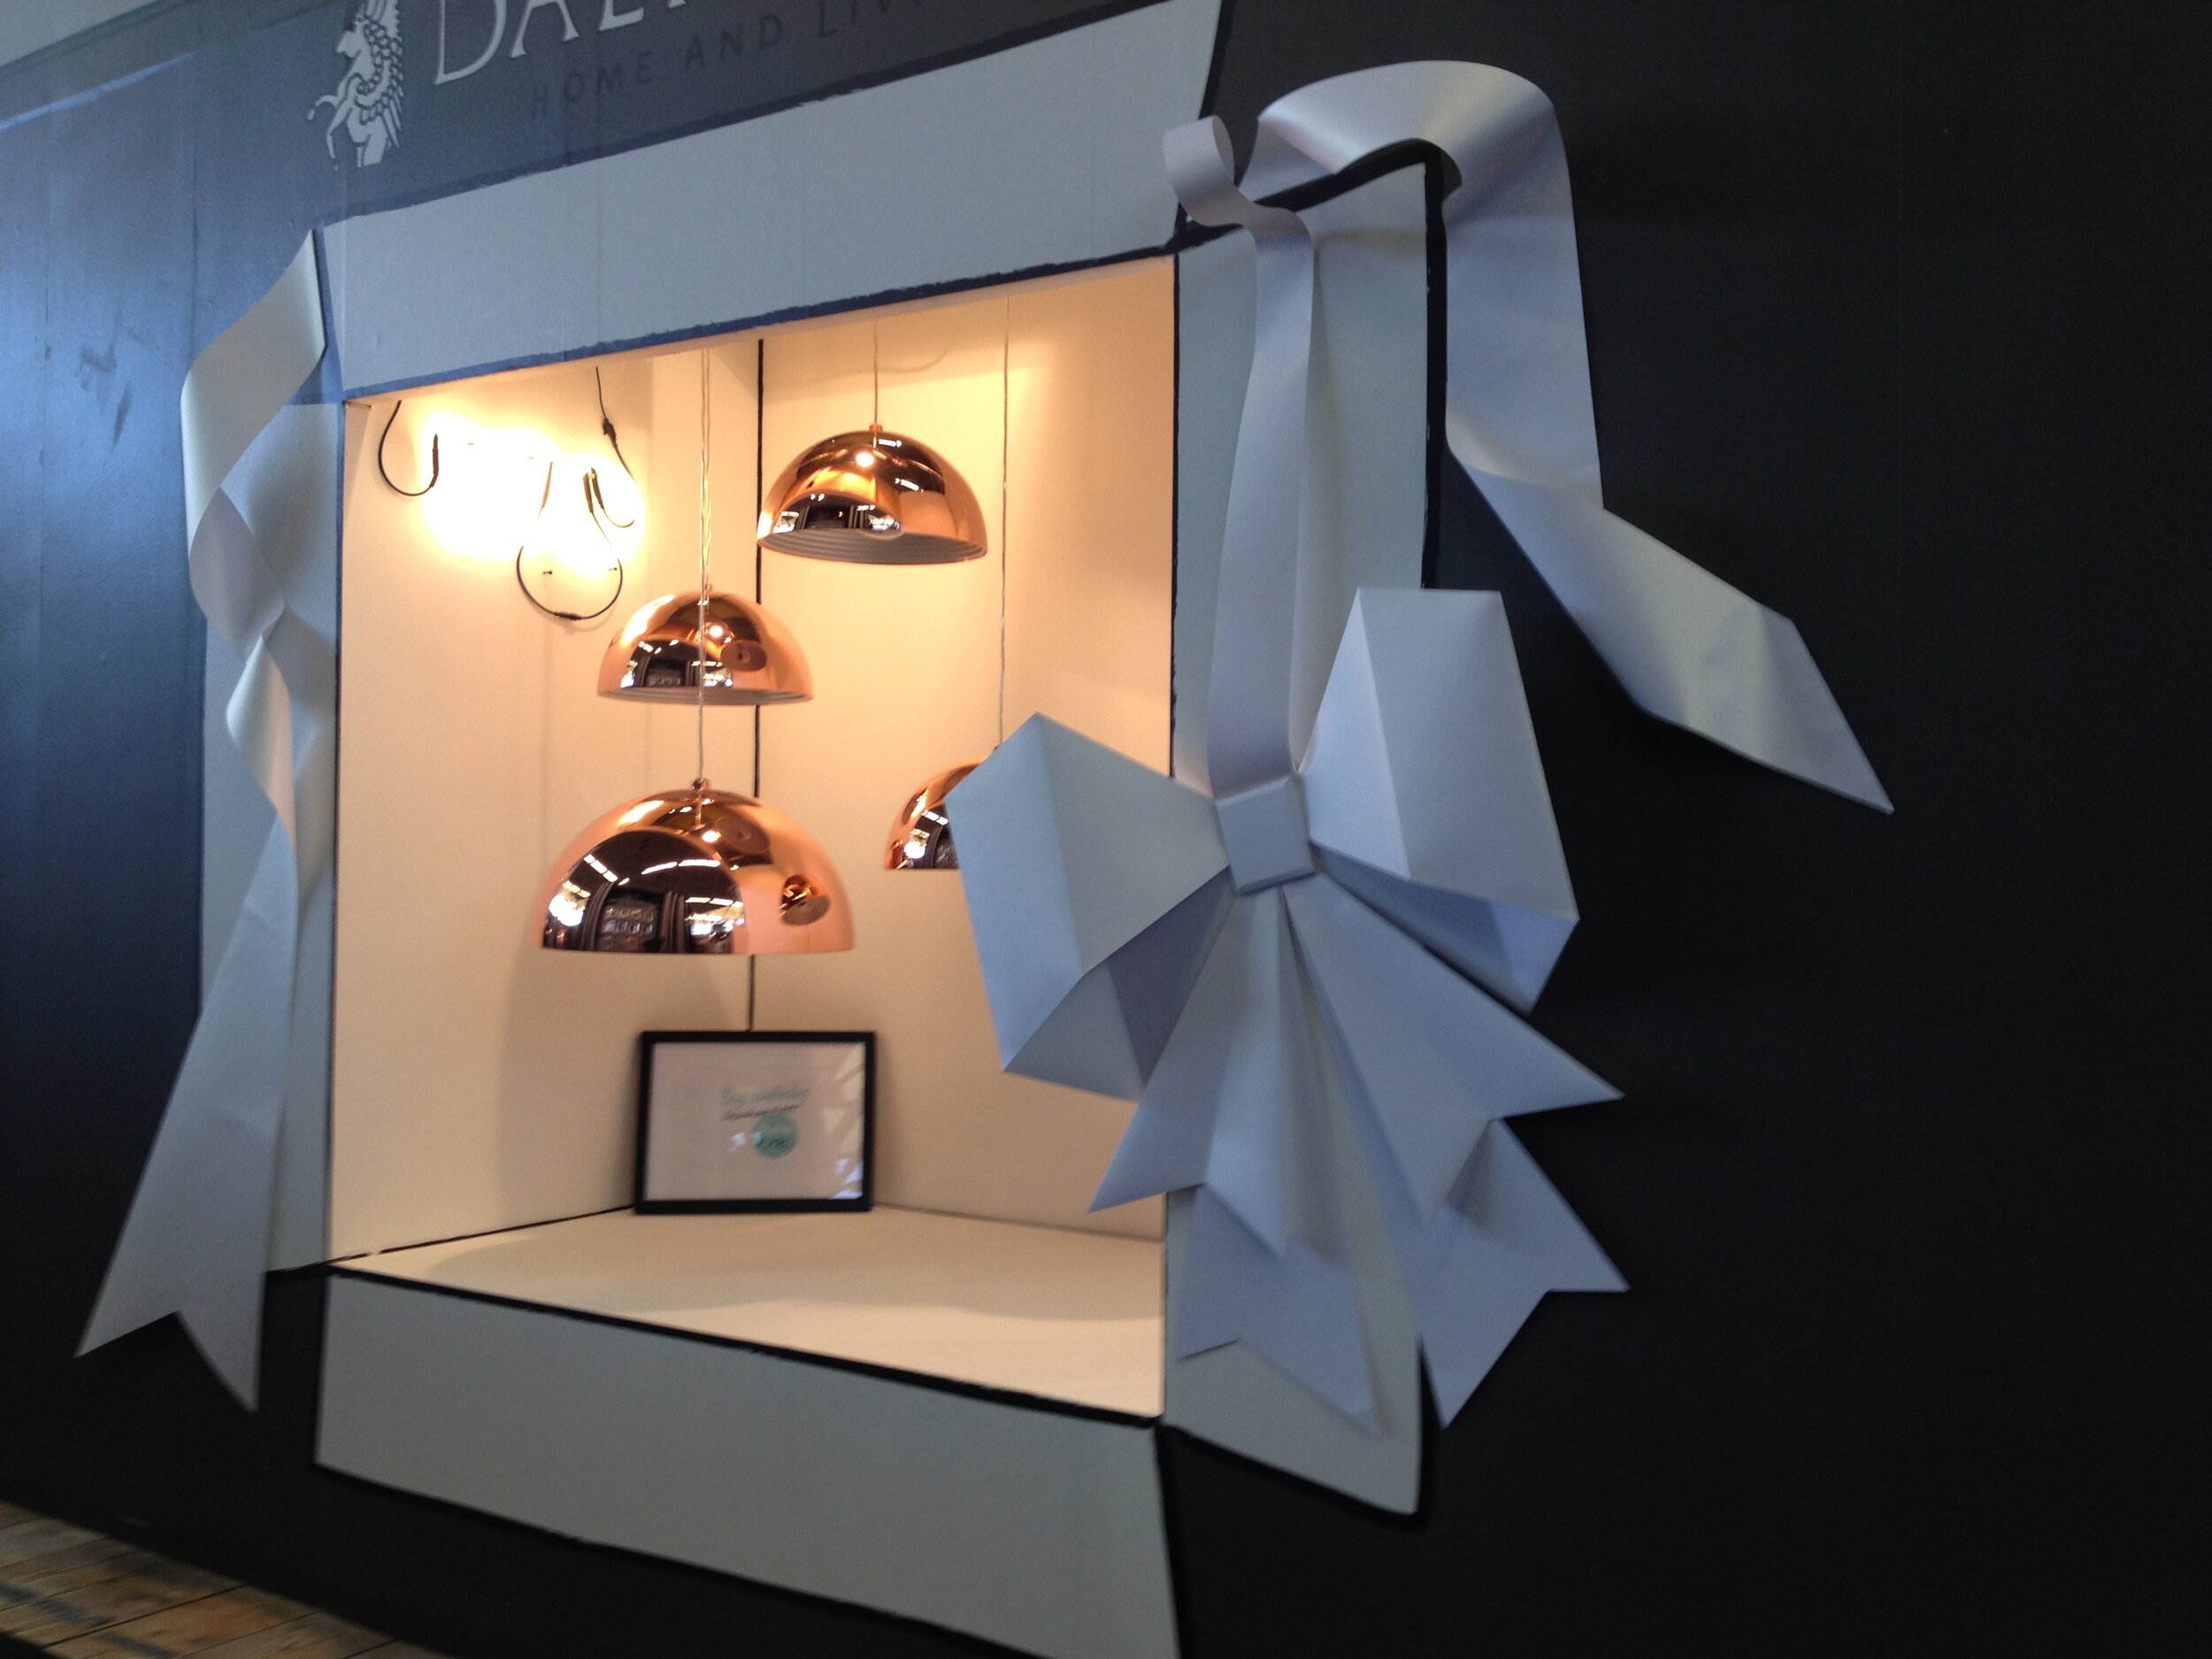 zoe-bradley-giant-paper-bow-window-display-dalani-paper-art.JPG